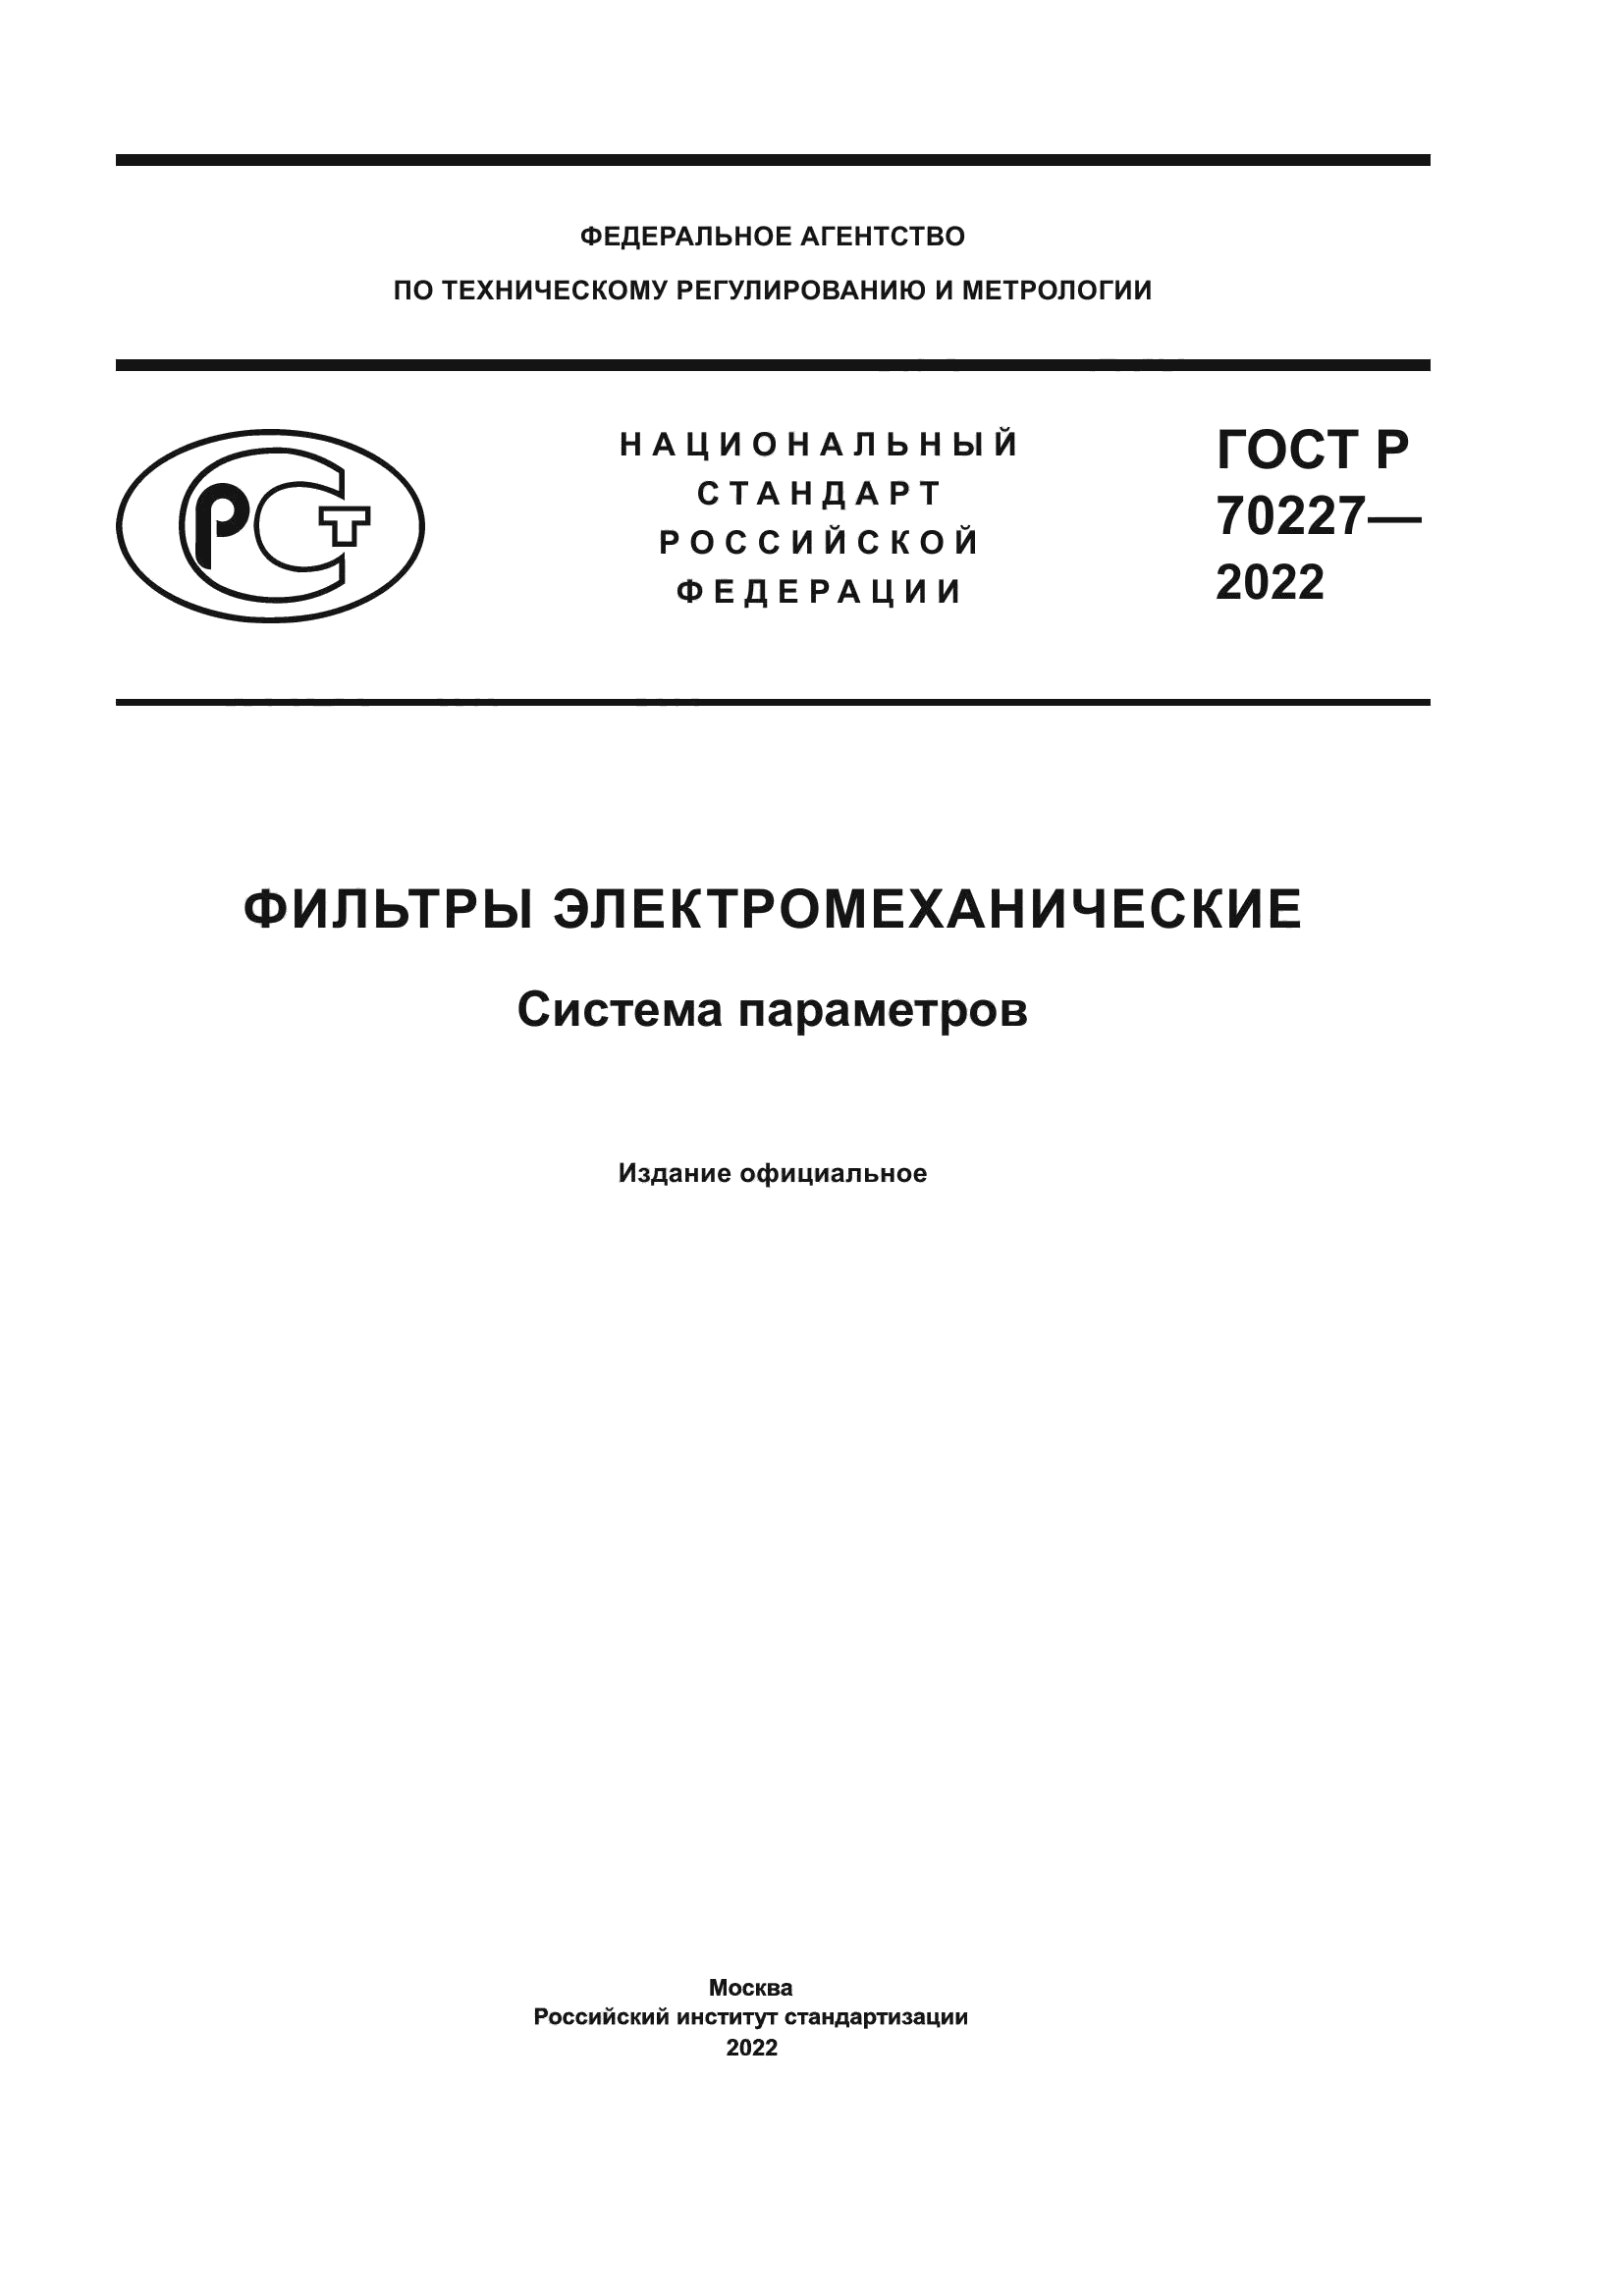 ГОСТ Р 70227-2022